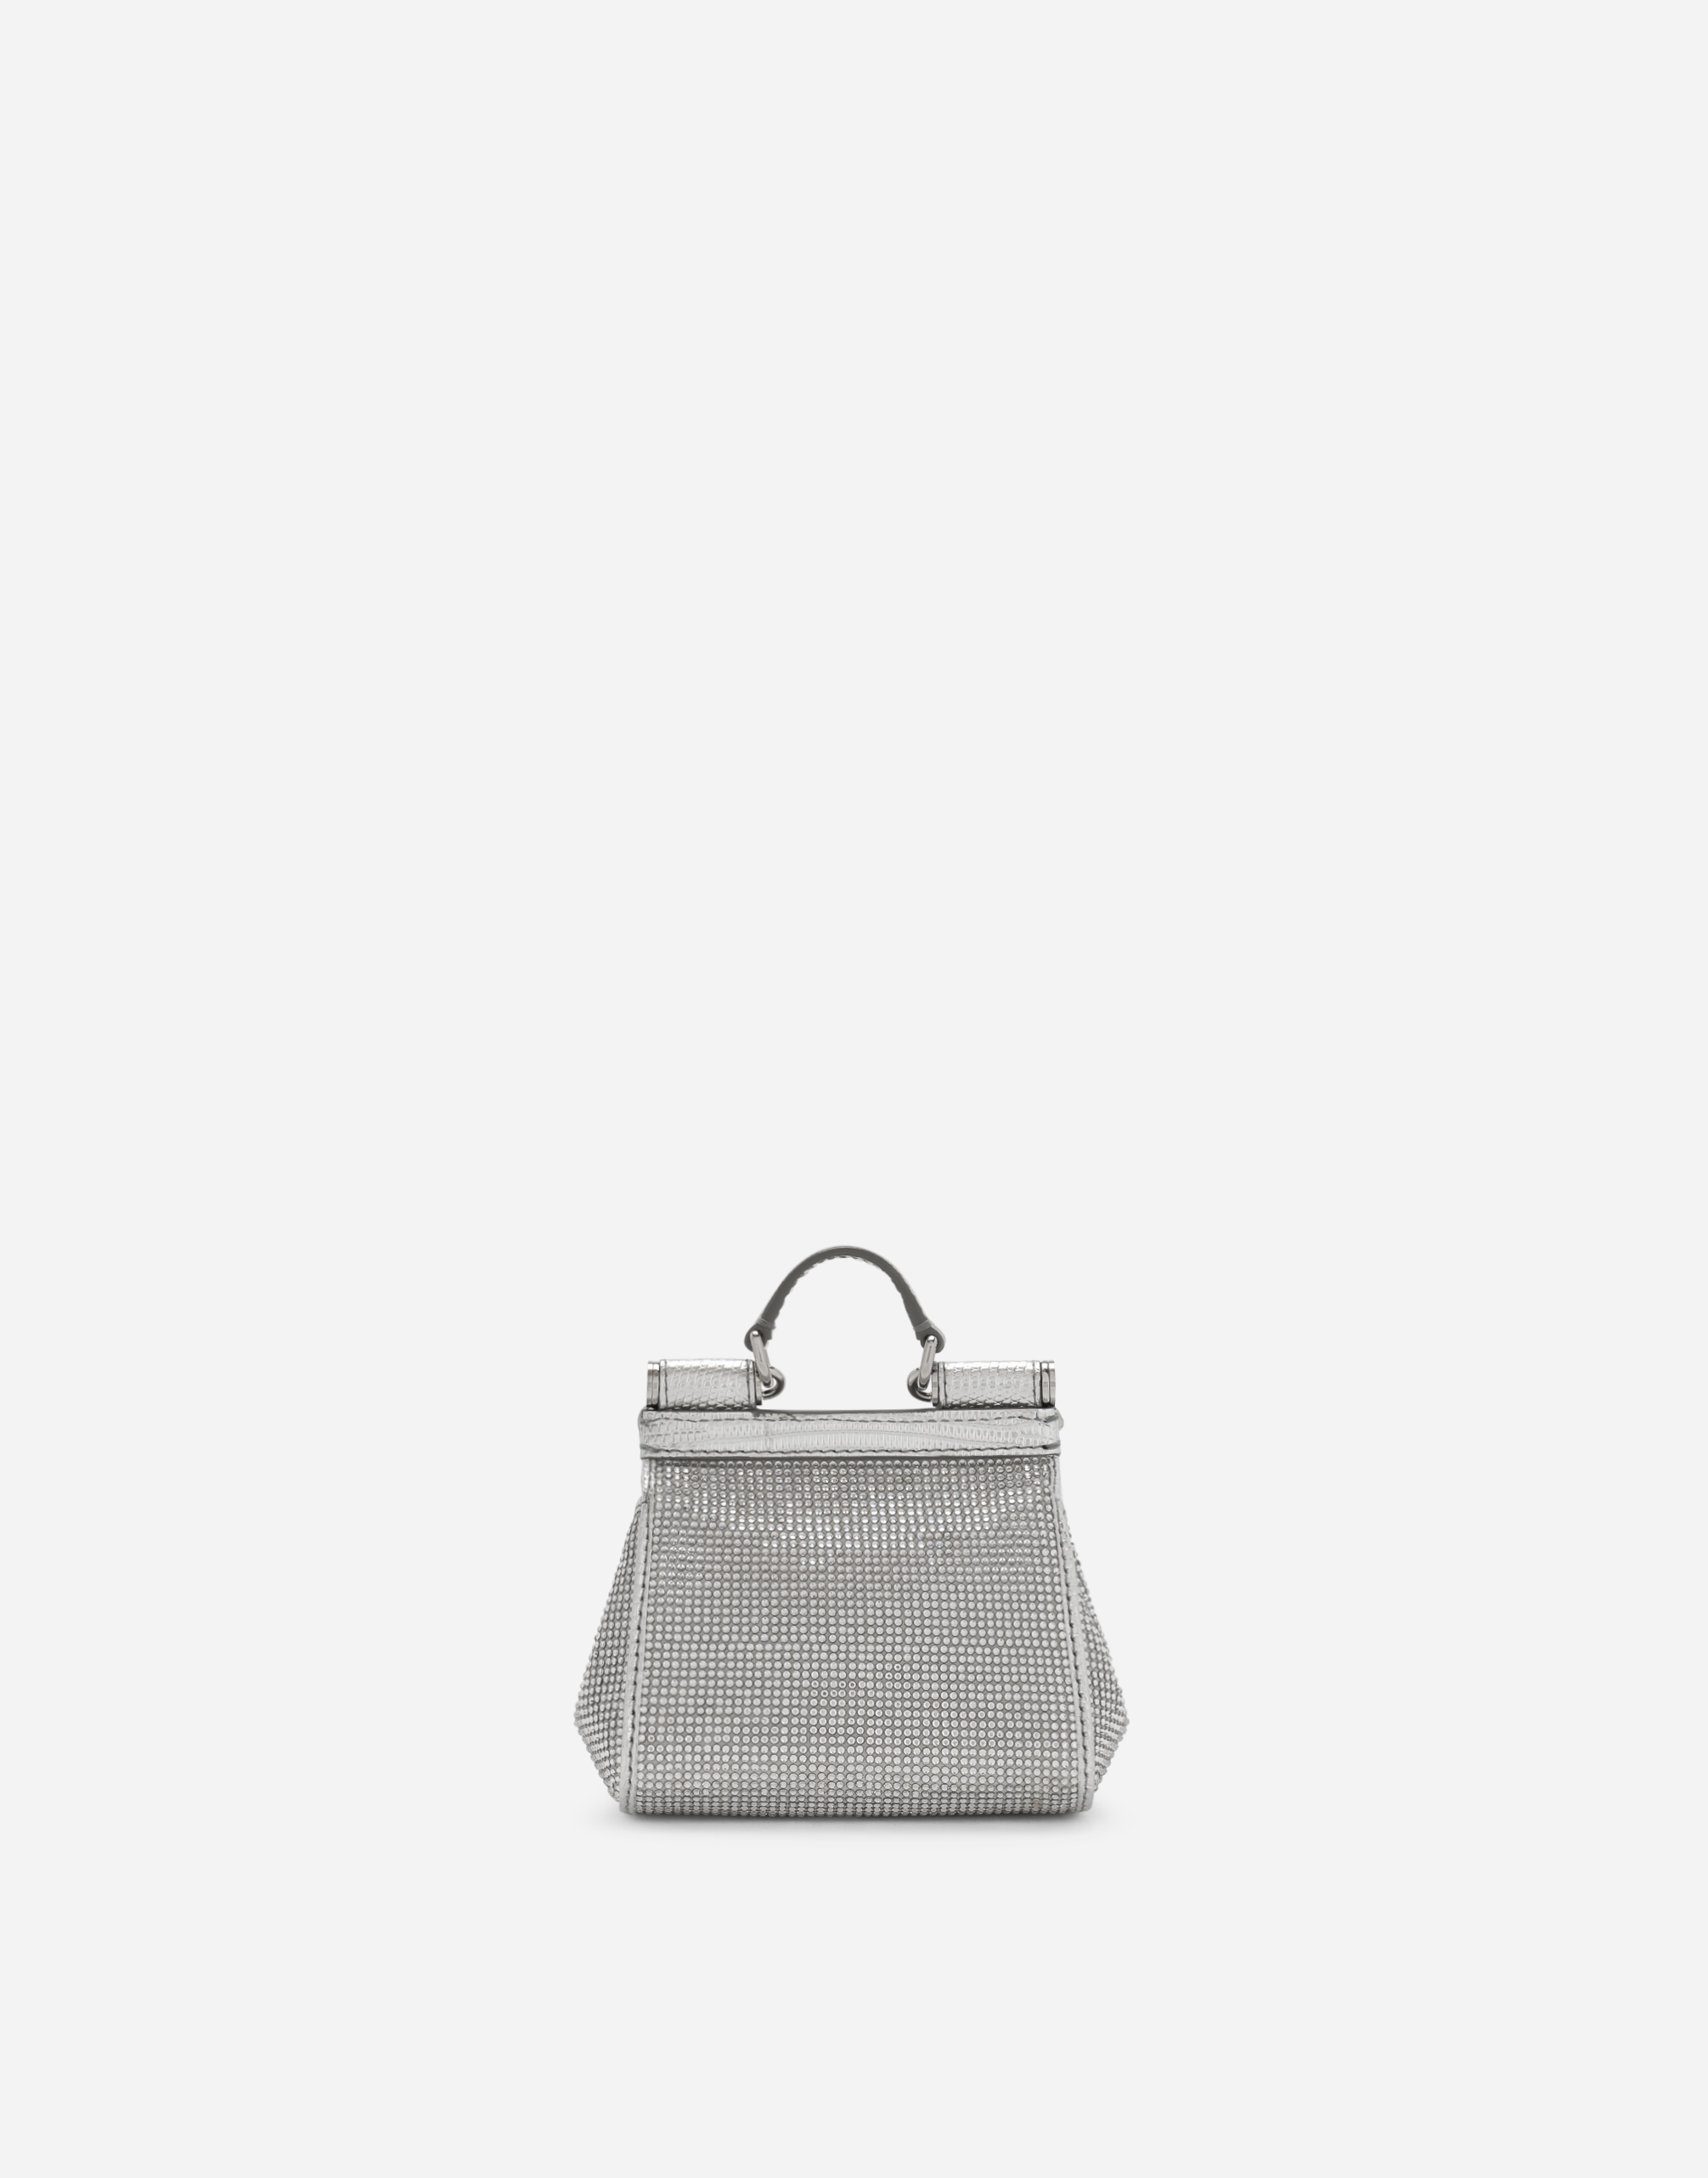 X Kim Sicily Small Embellished Shoulder Bag in Silver - Dolce